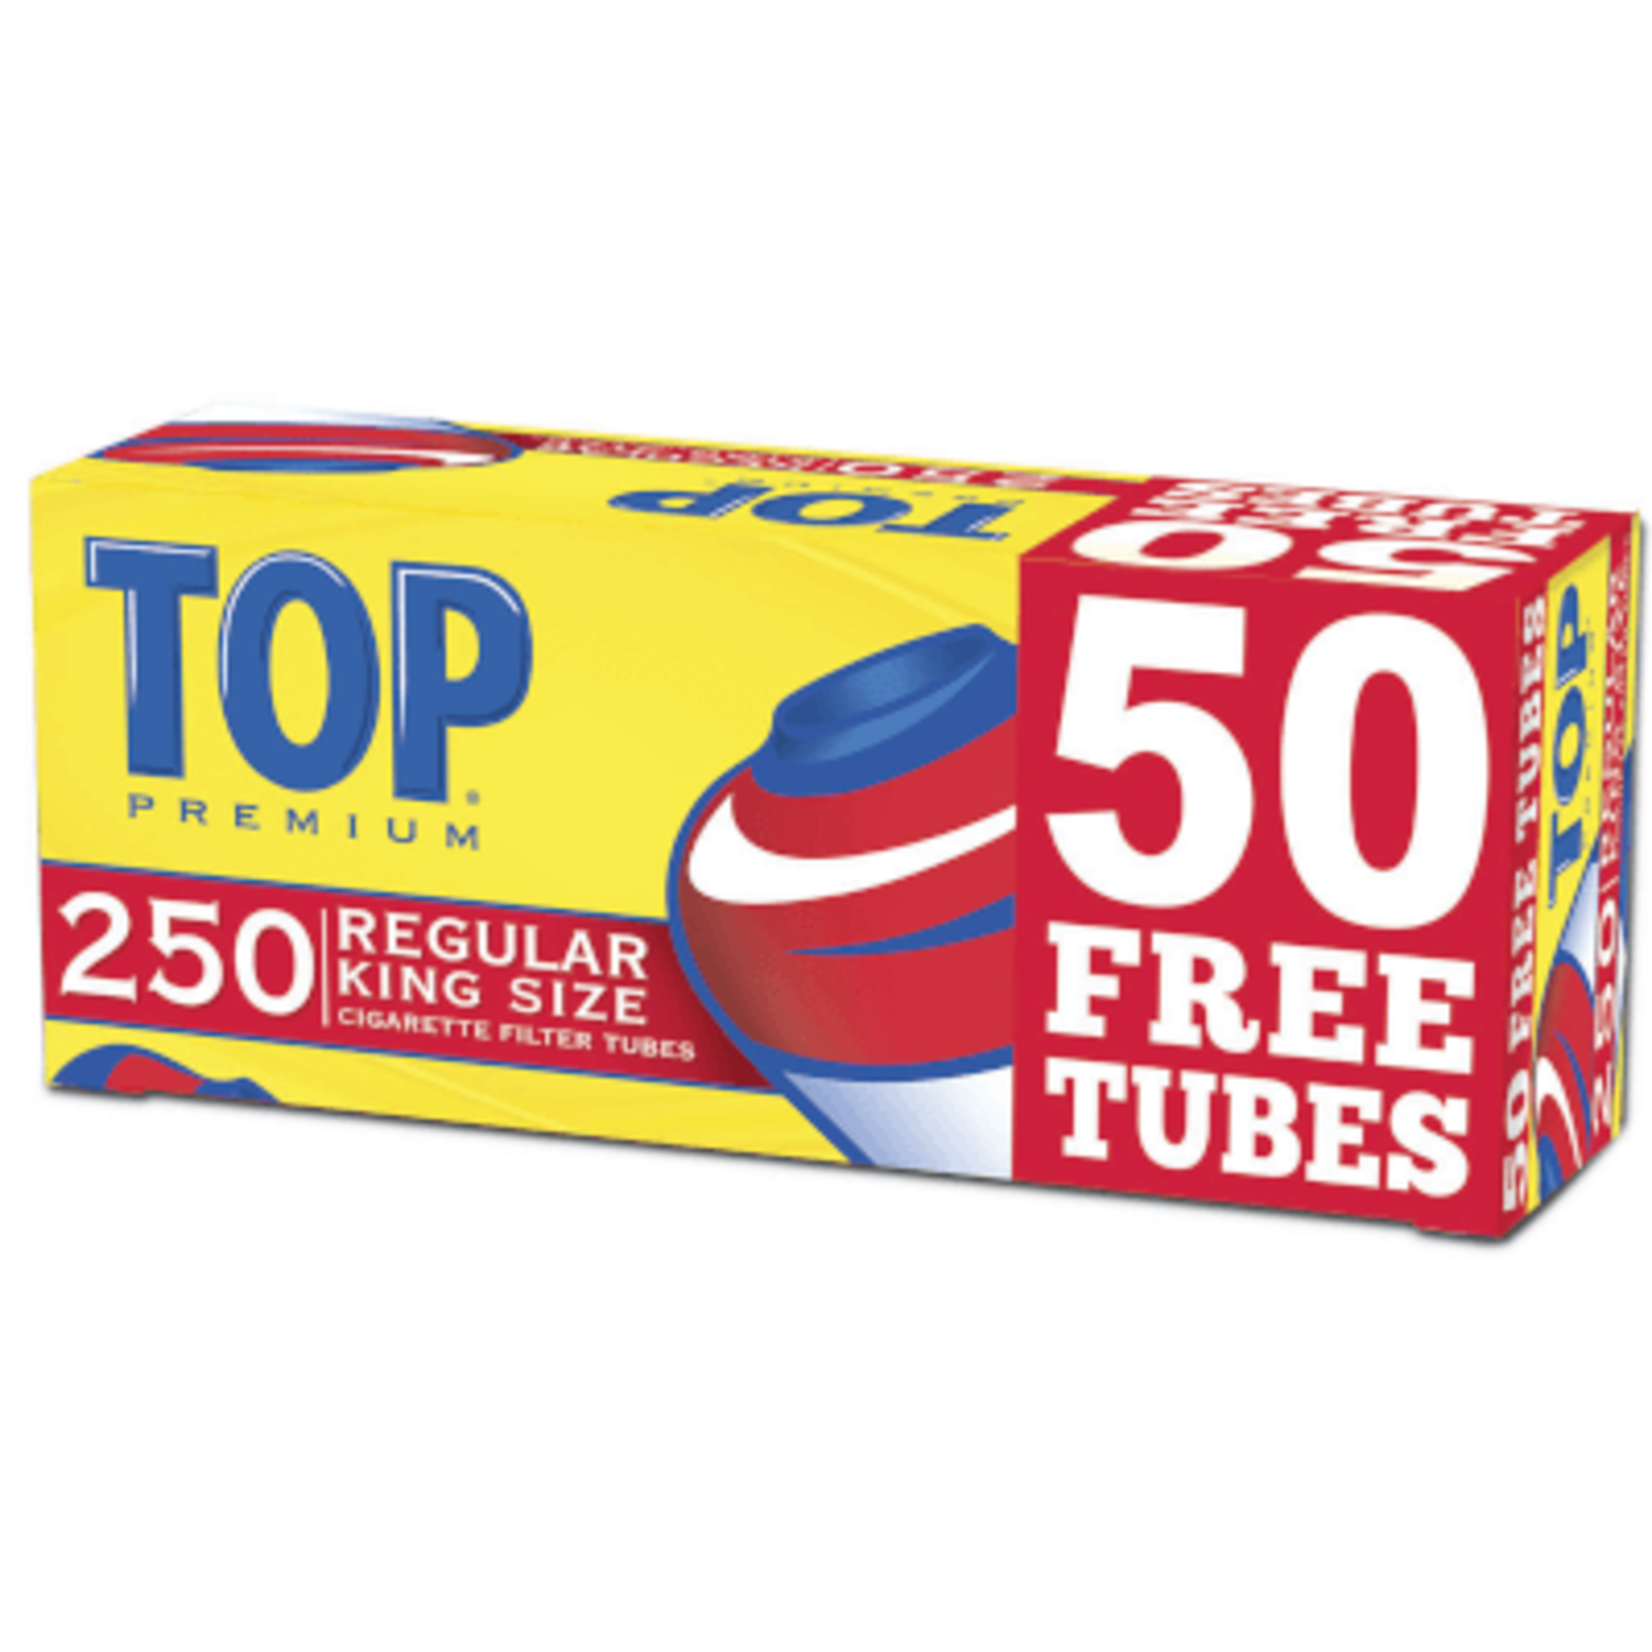 TOP Top Cigarette Filter Tubes 250ct.